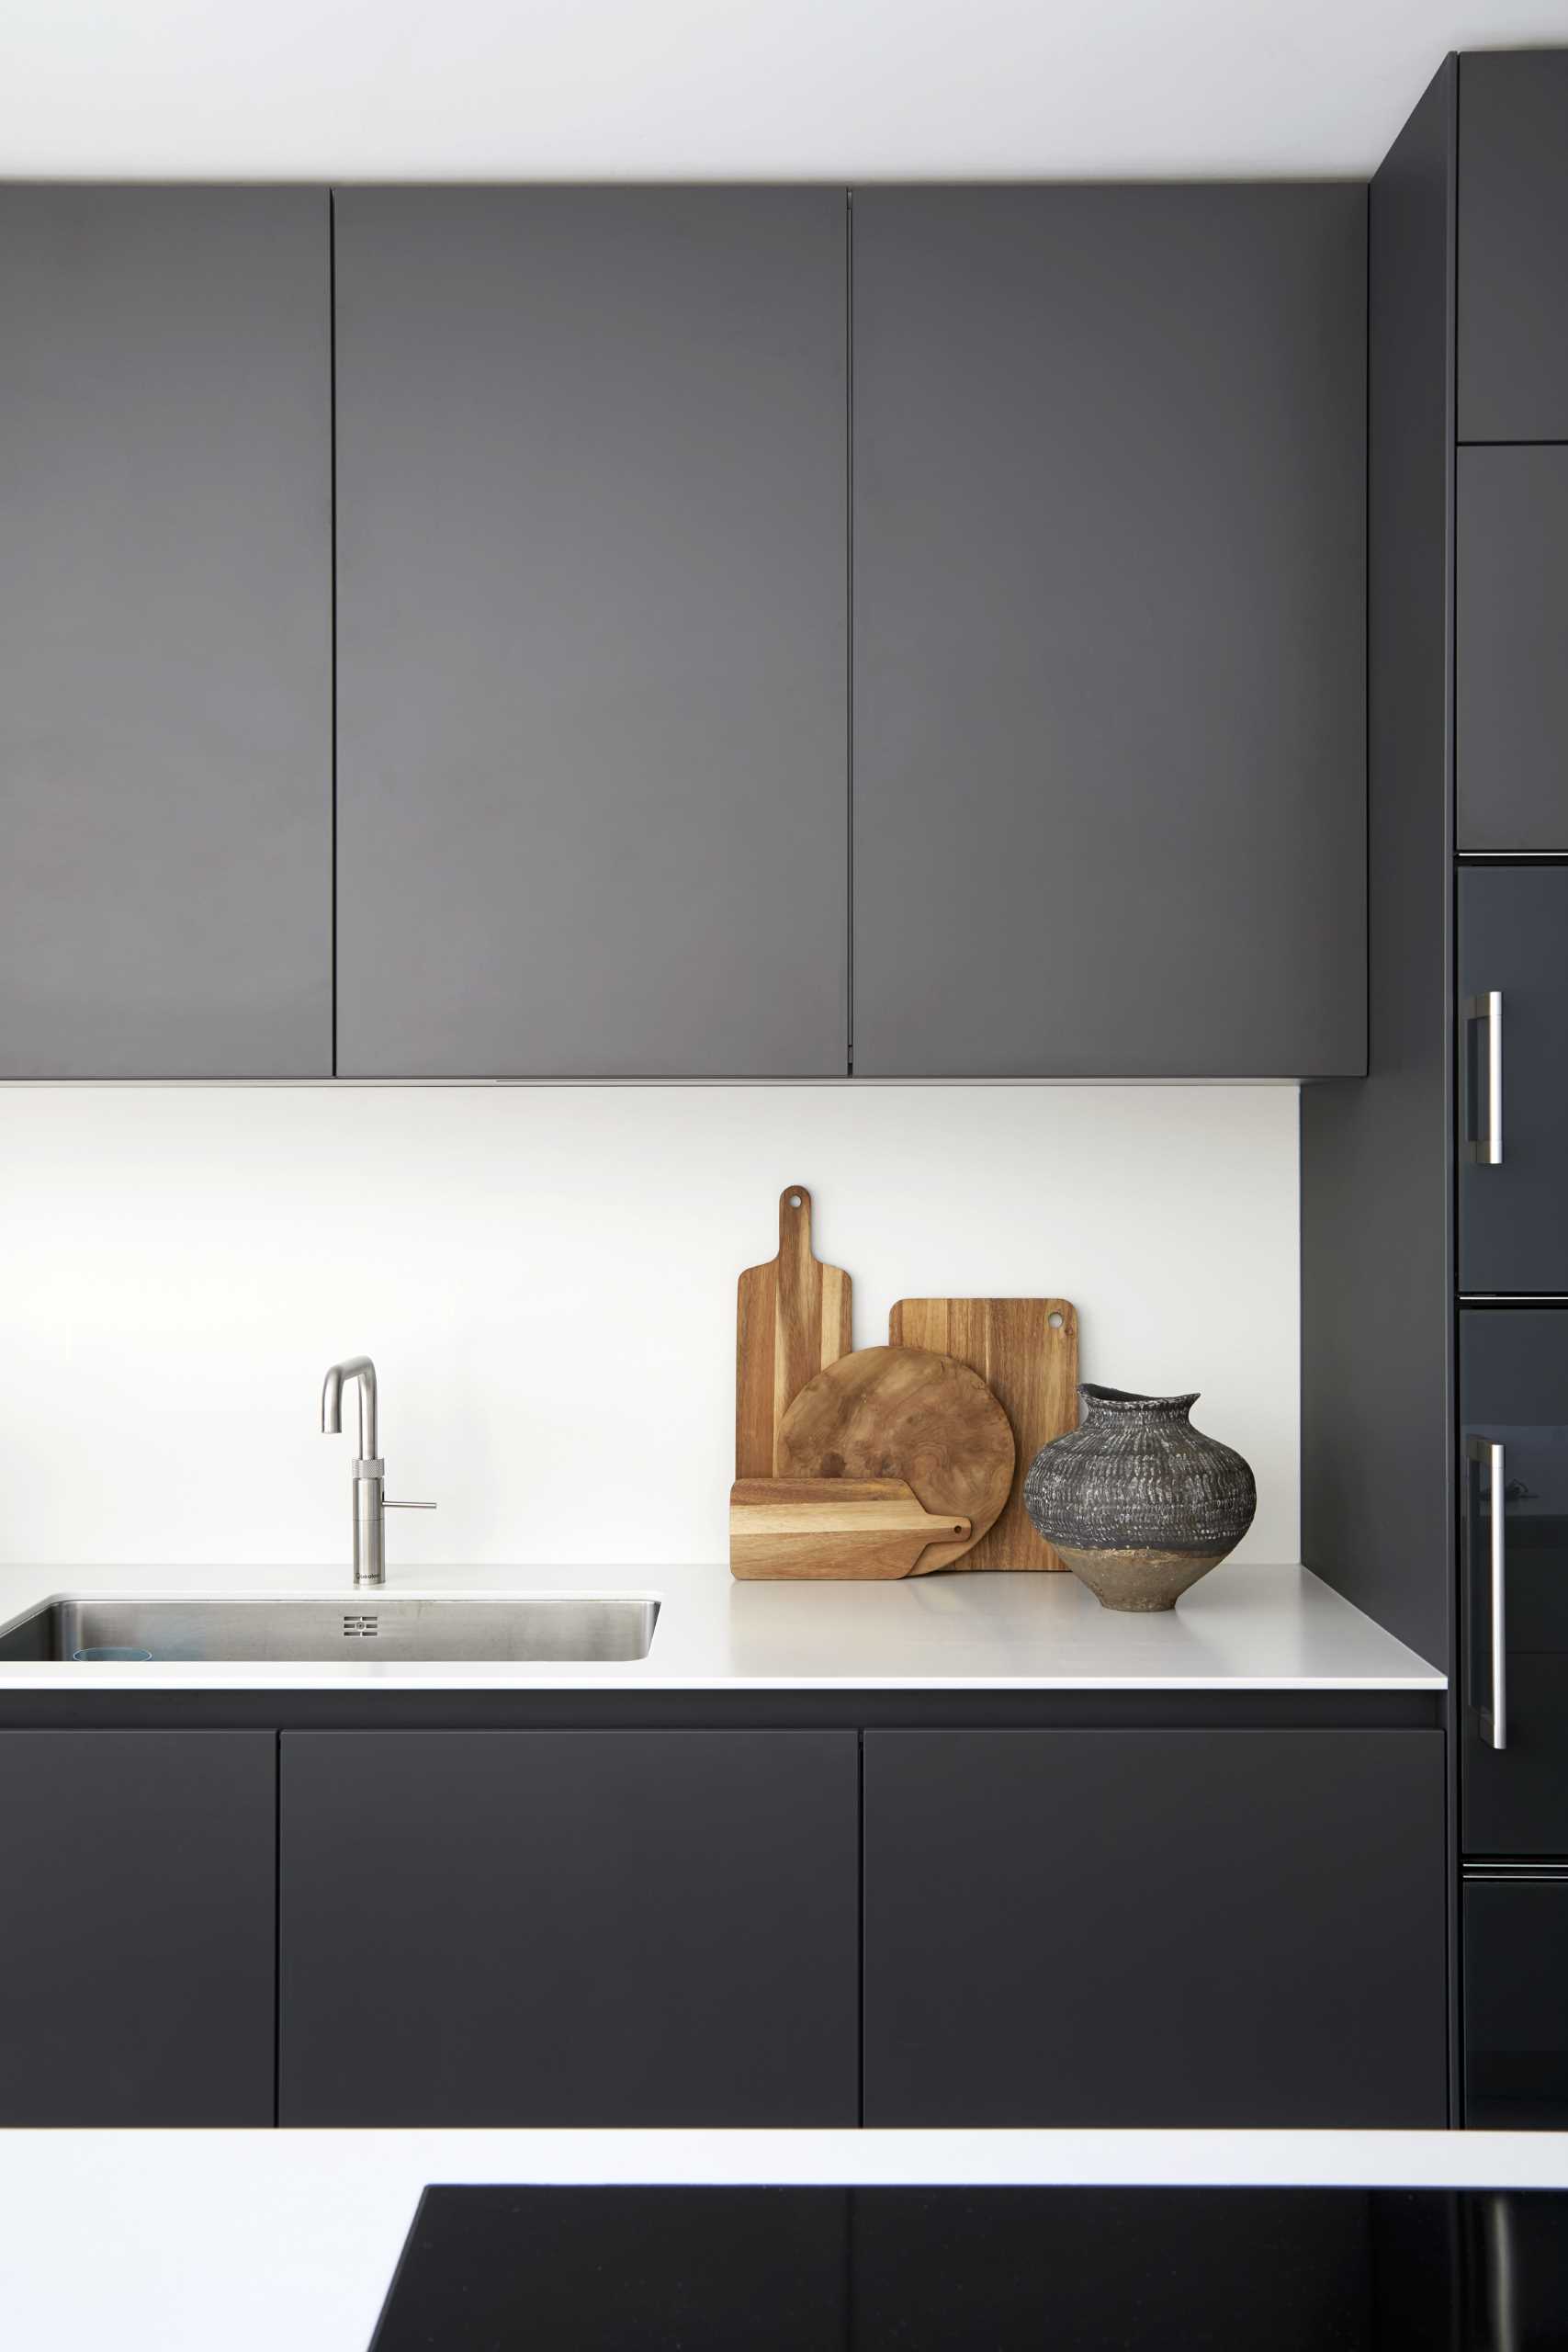 A modern kitchen with matte black cabinets and white backsplash.